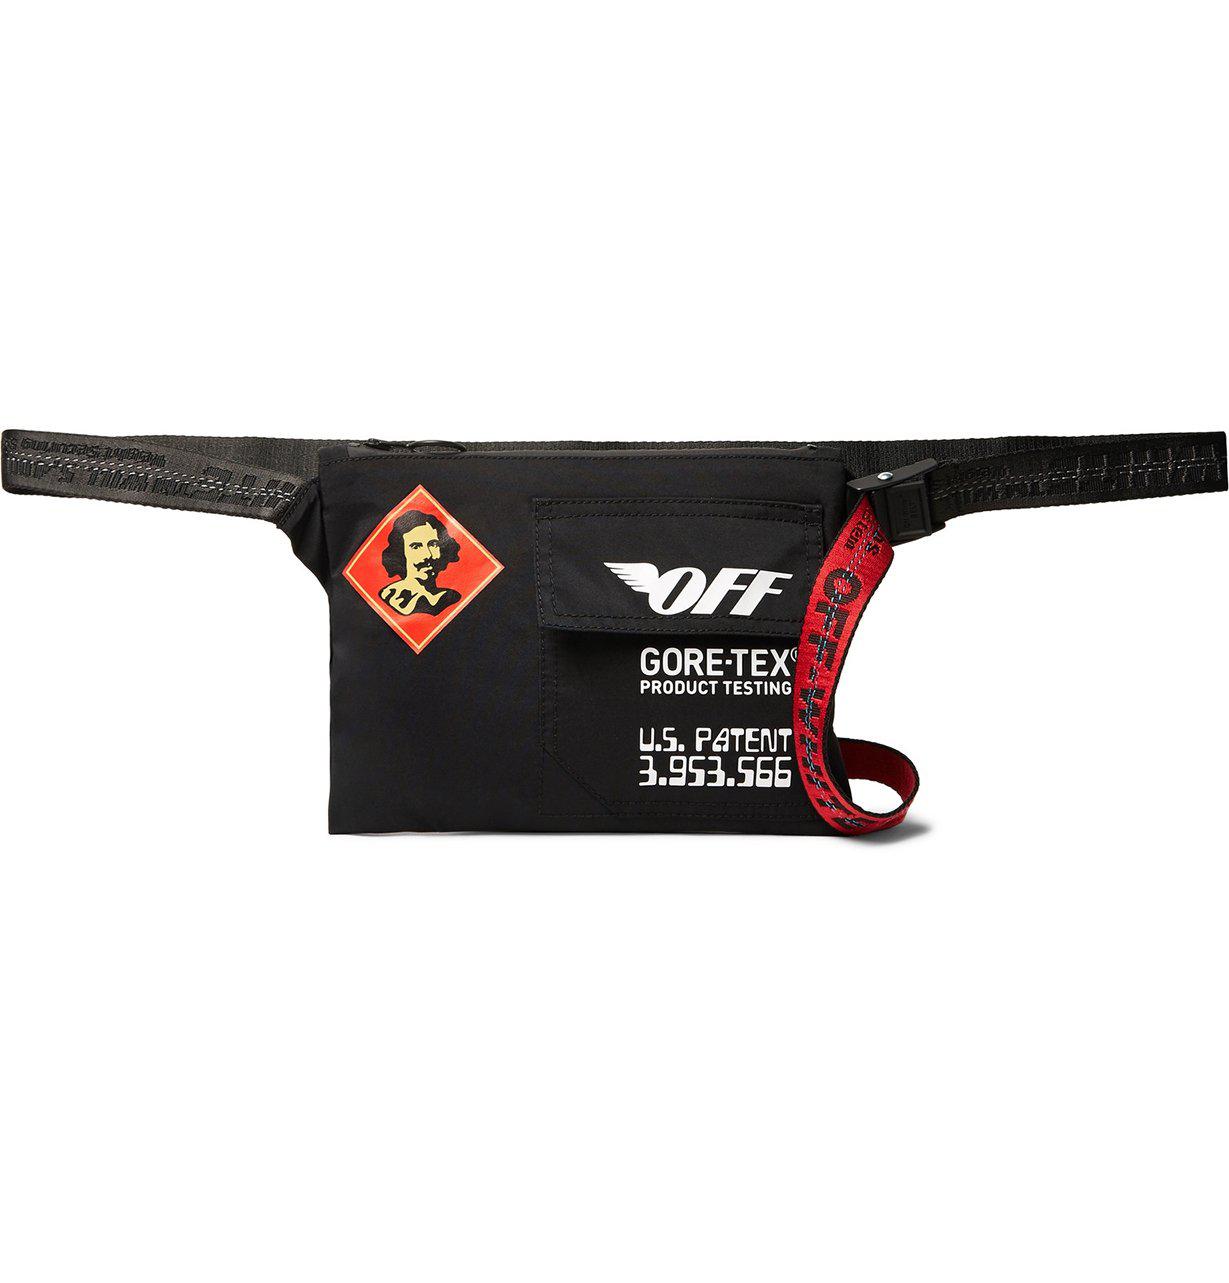 Off-White c/o Virgil Abloh Black Gore-tex® Belt Bag By in Black - Lyst